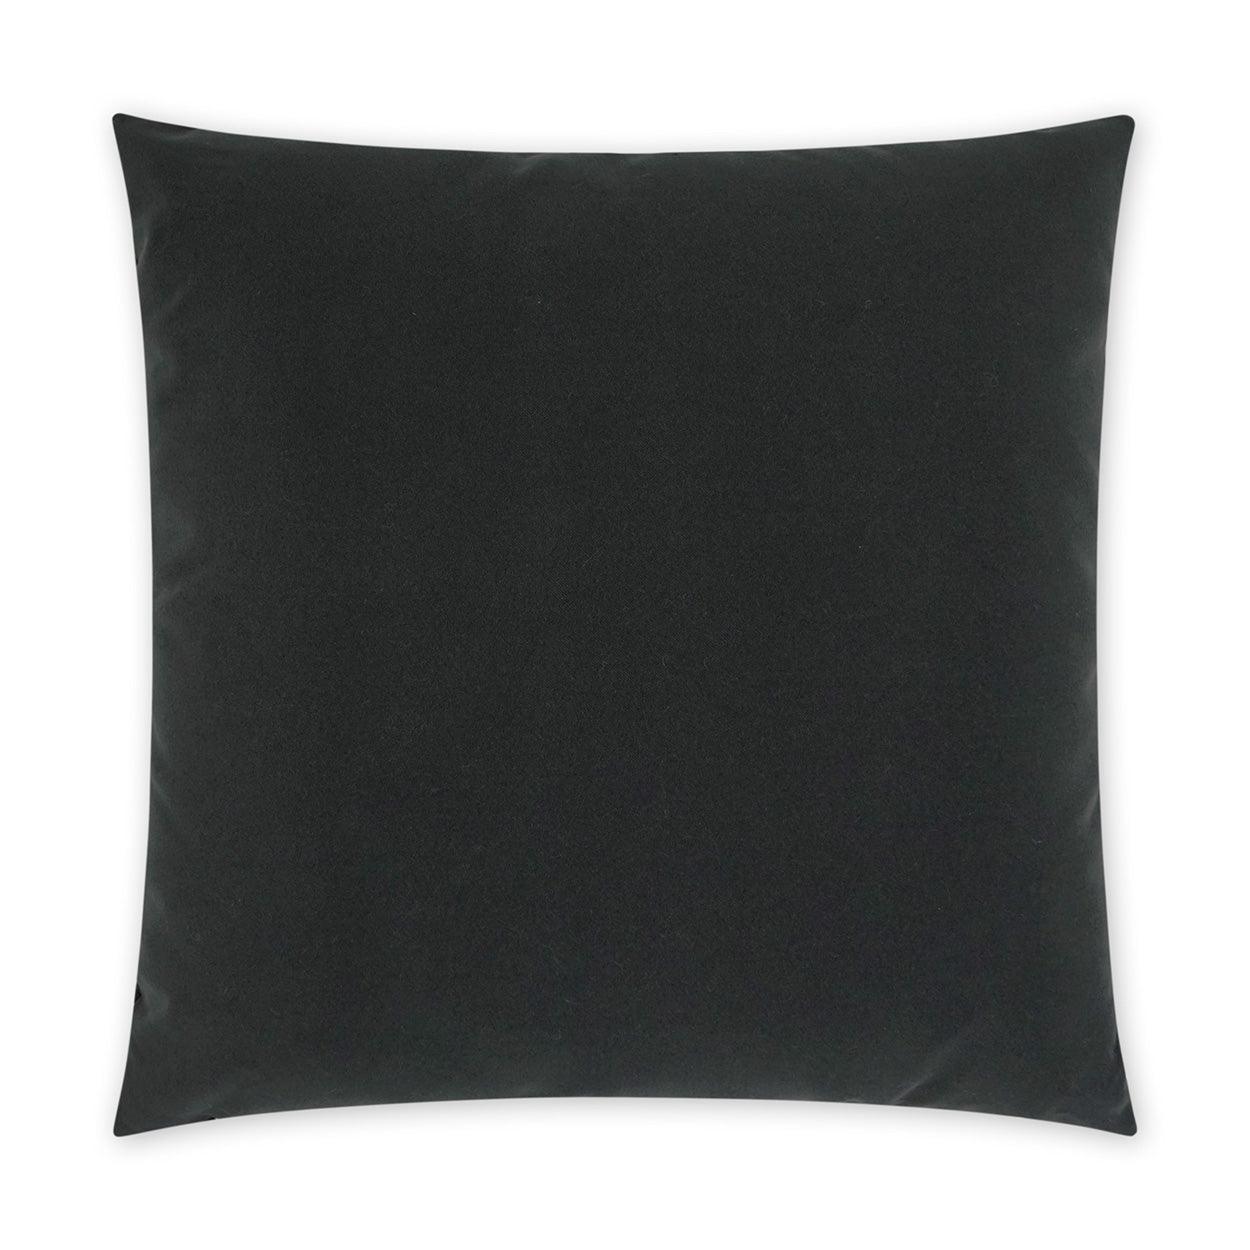 LOOMLAN Outdoor - Outdoor Sundance Pillow - Charcoal - Outdoor Pillows